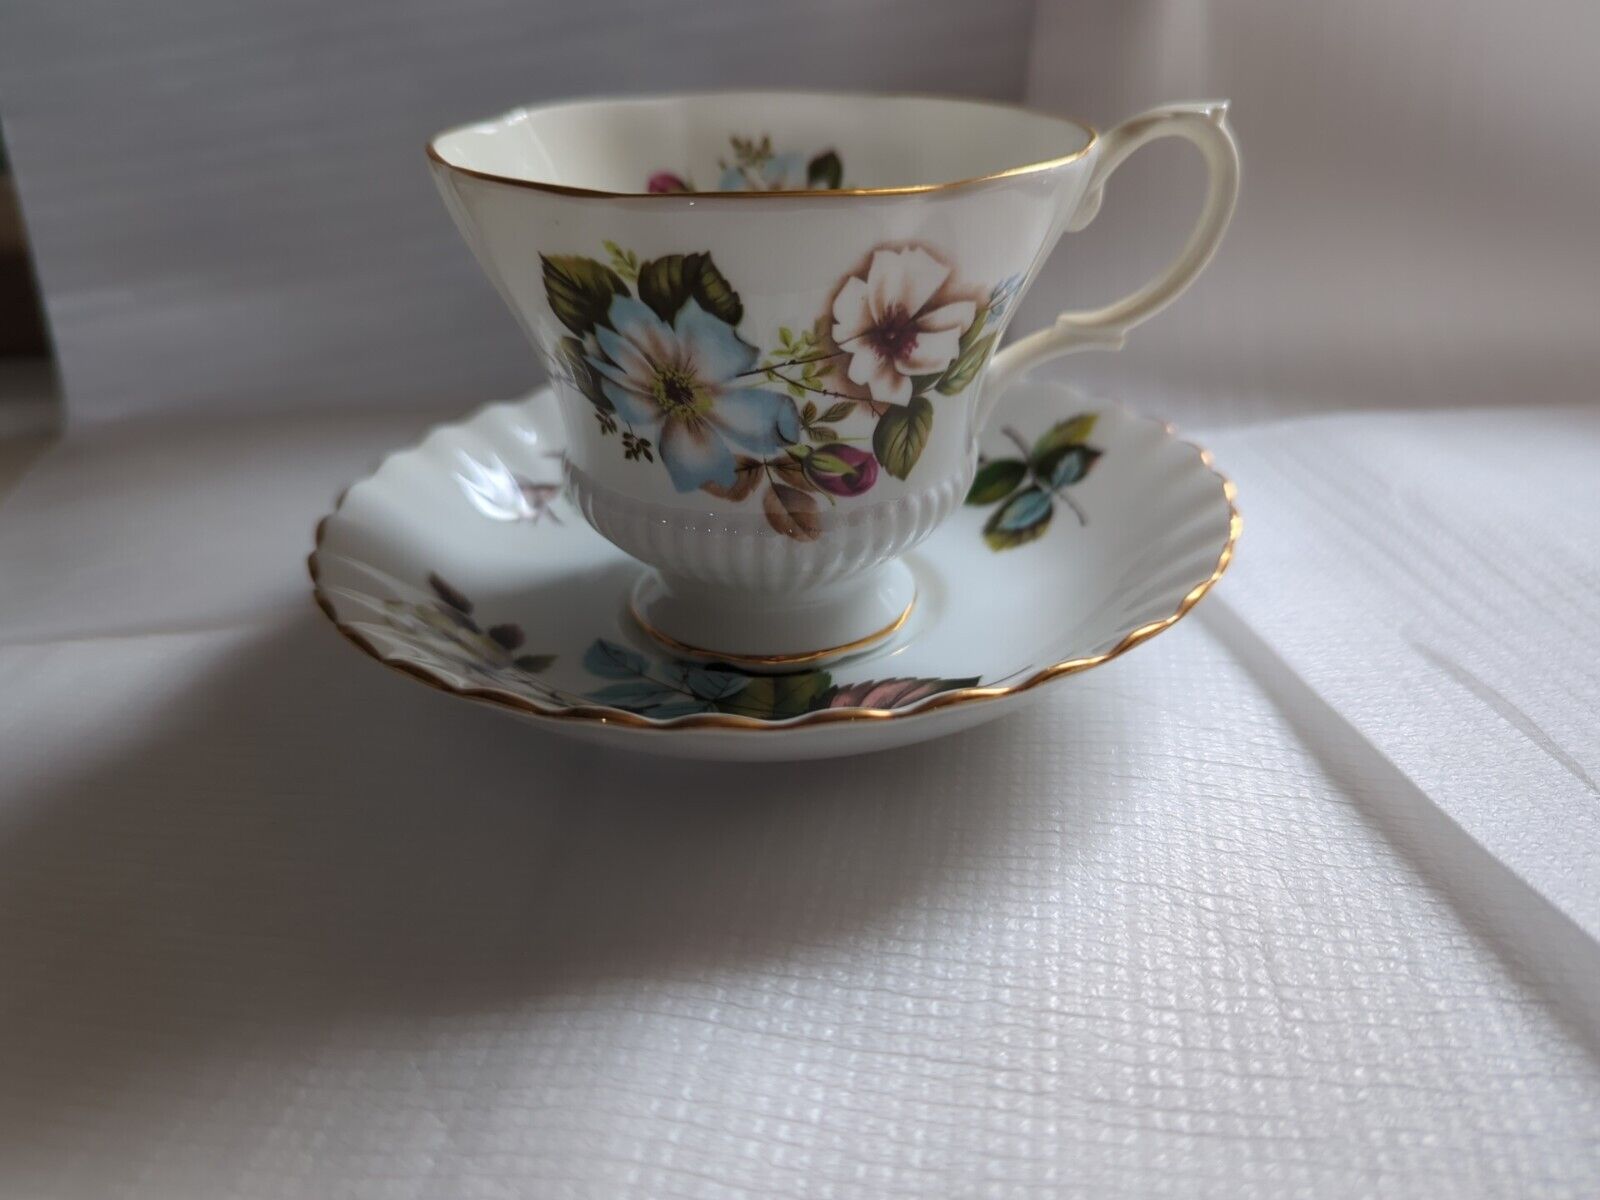 Vintage Royal Albert Bone China Teacup And Saucer Set Made In England 